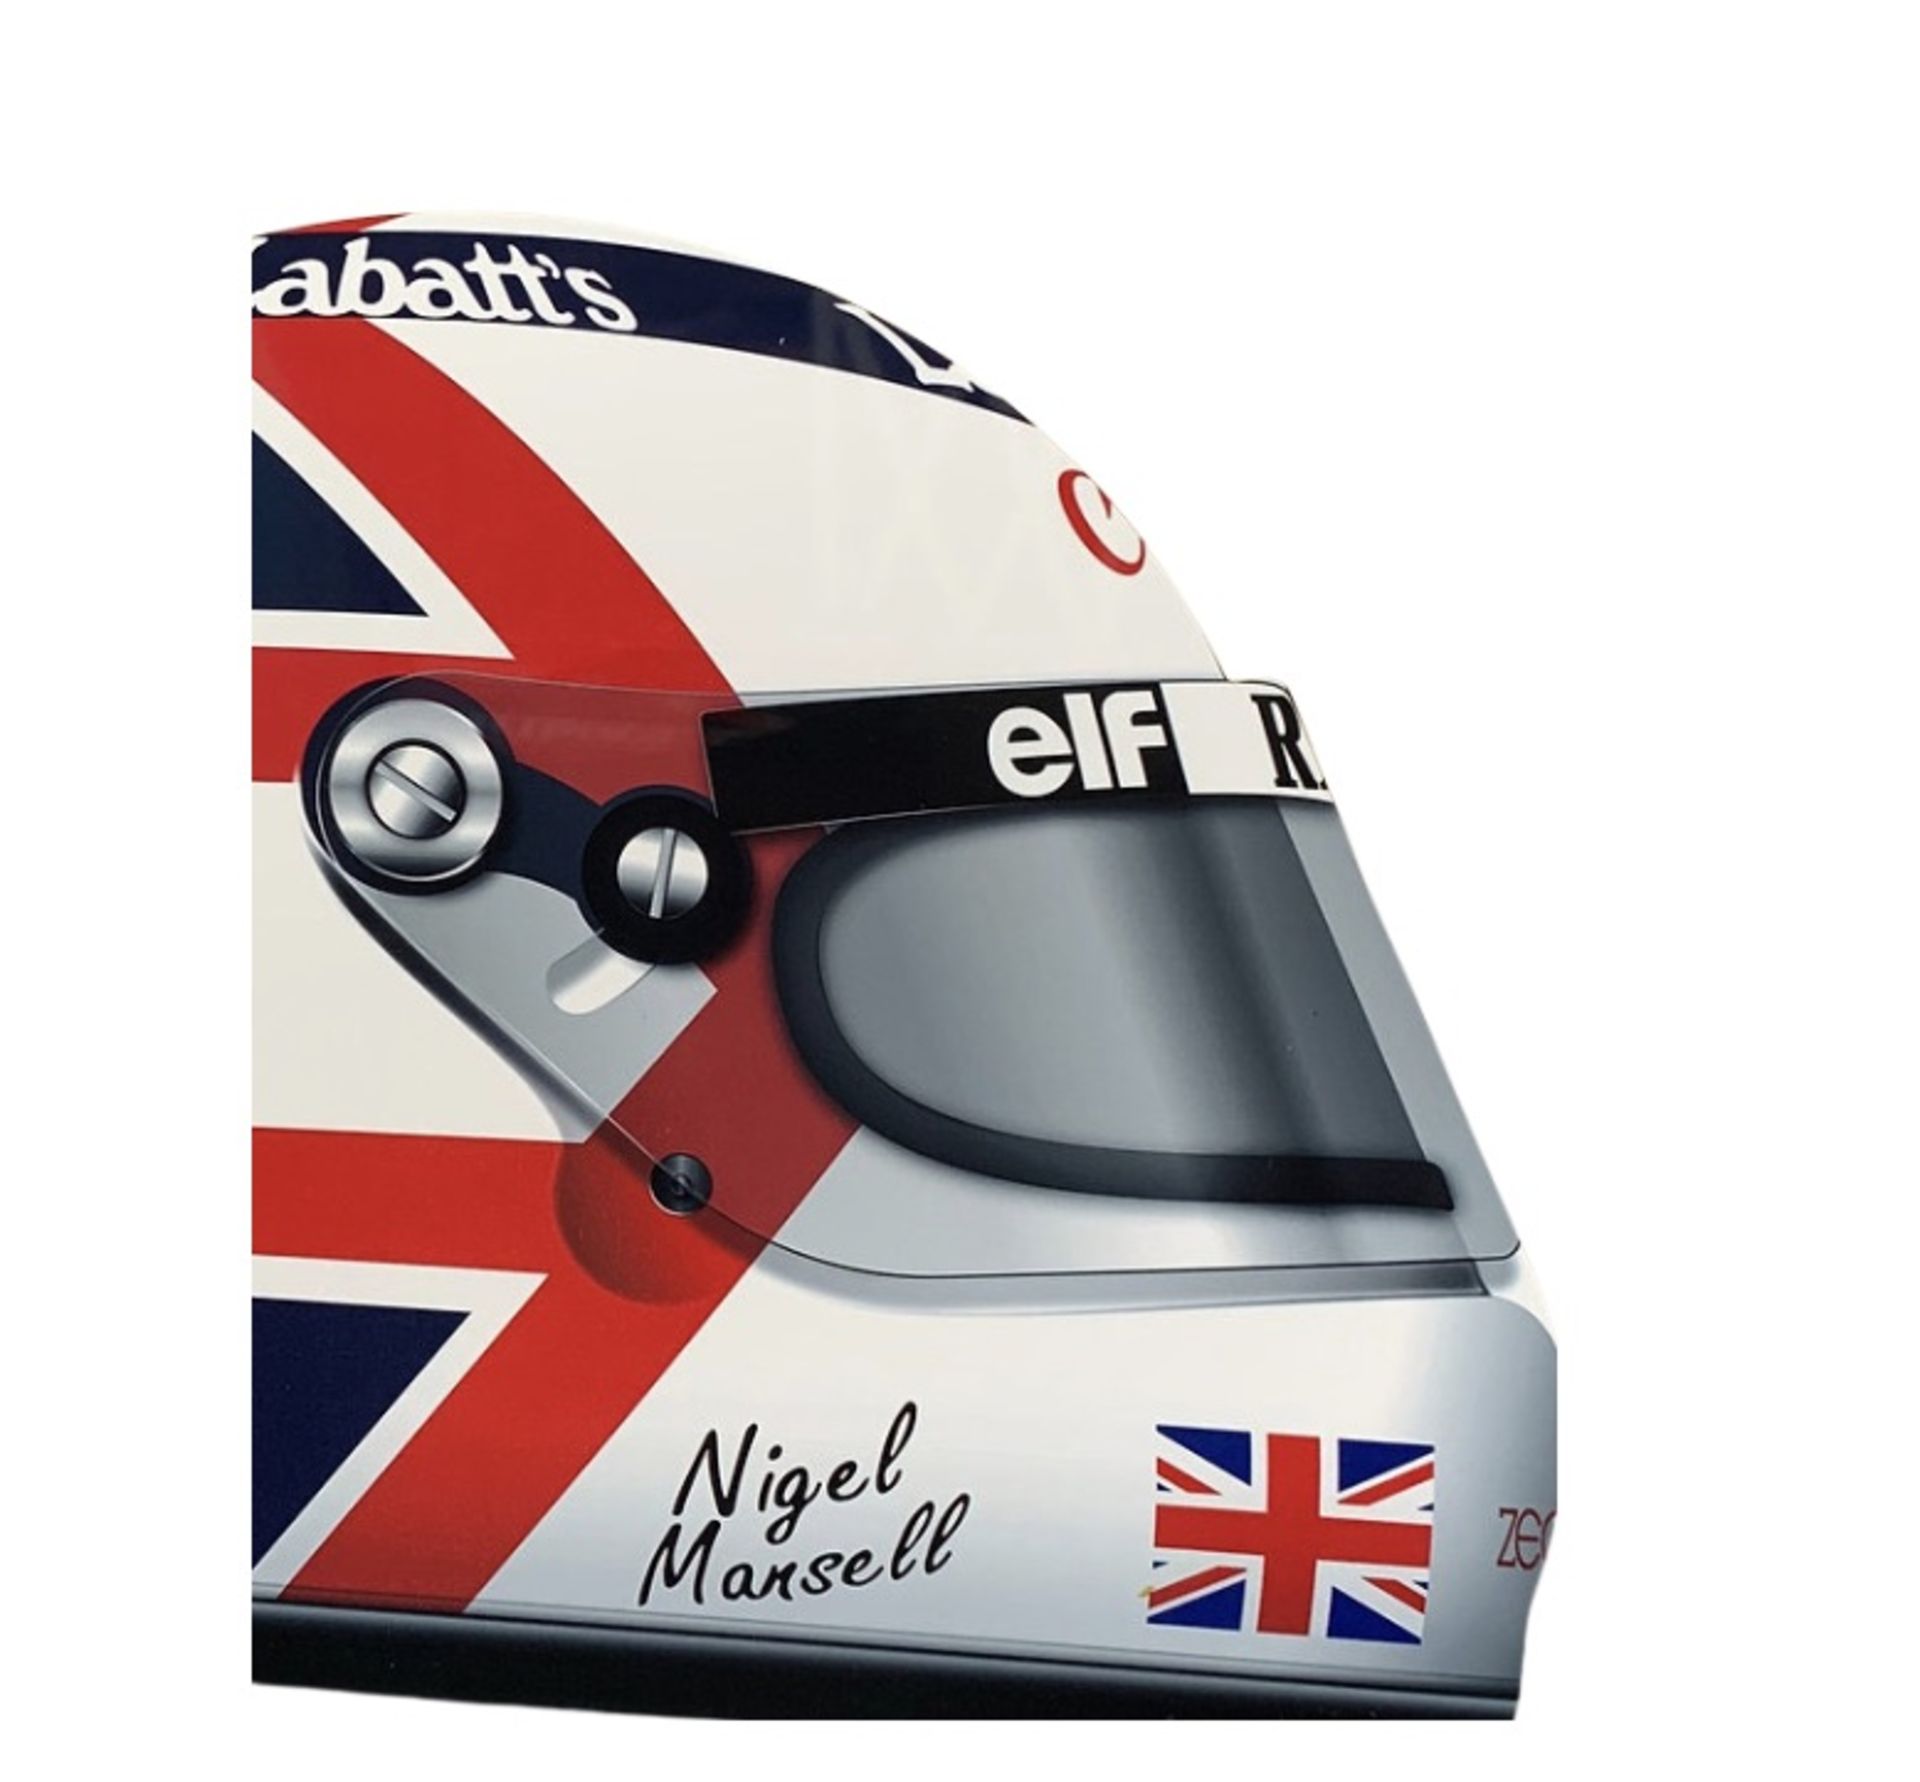 Nigel Mansell F1 Helmet Aluminum Garage Wall Display - Image 2 of 5